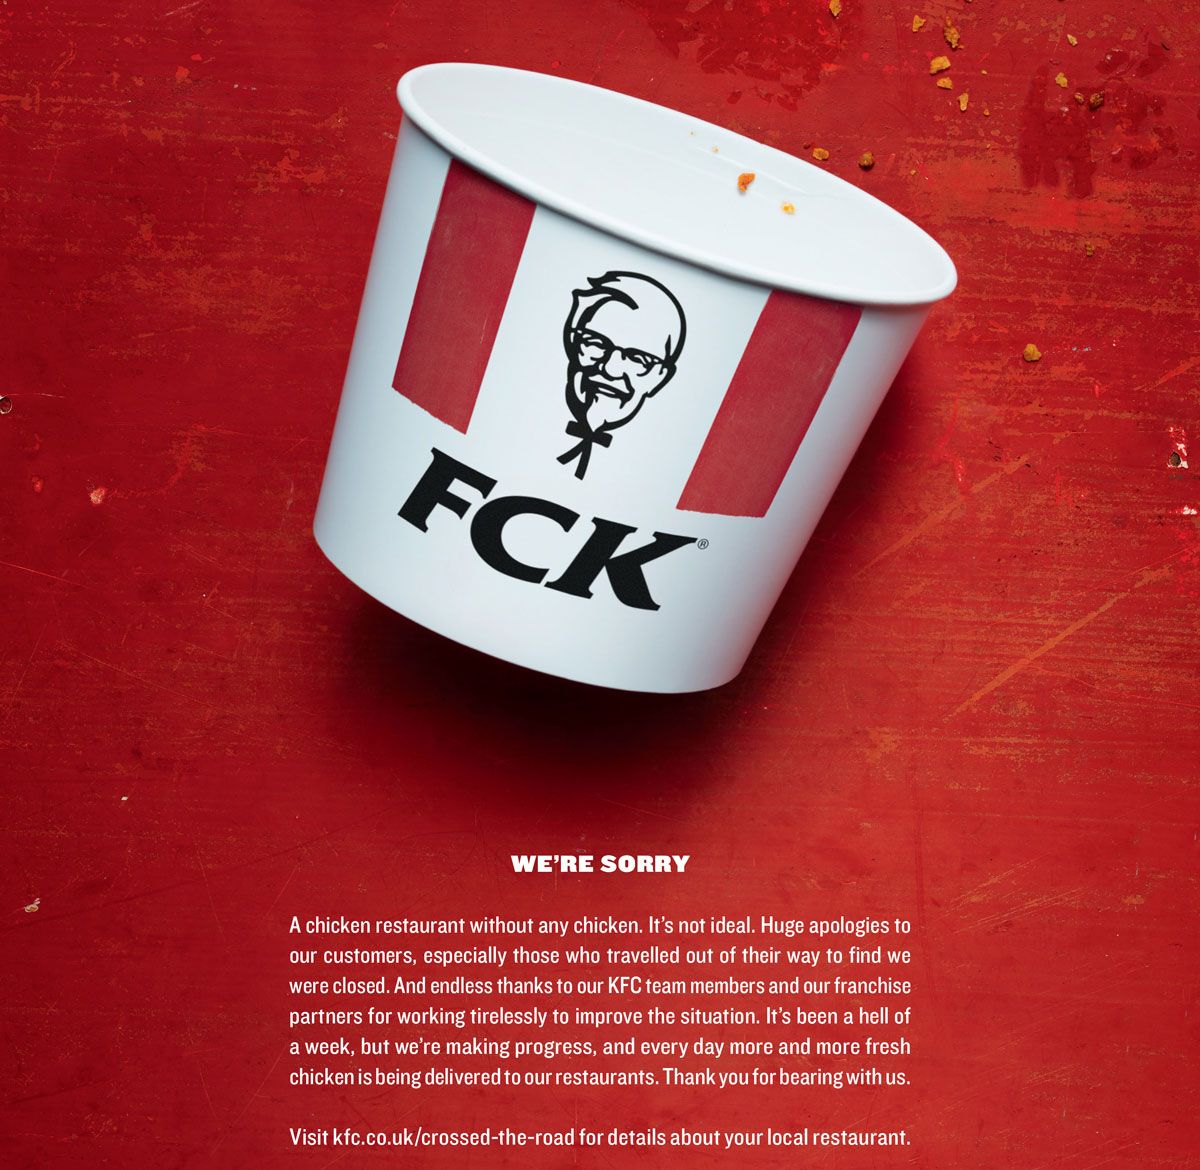 Printwerbung: KFC geht das Huhn aus